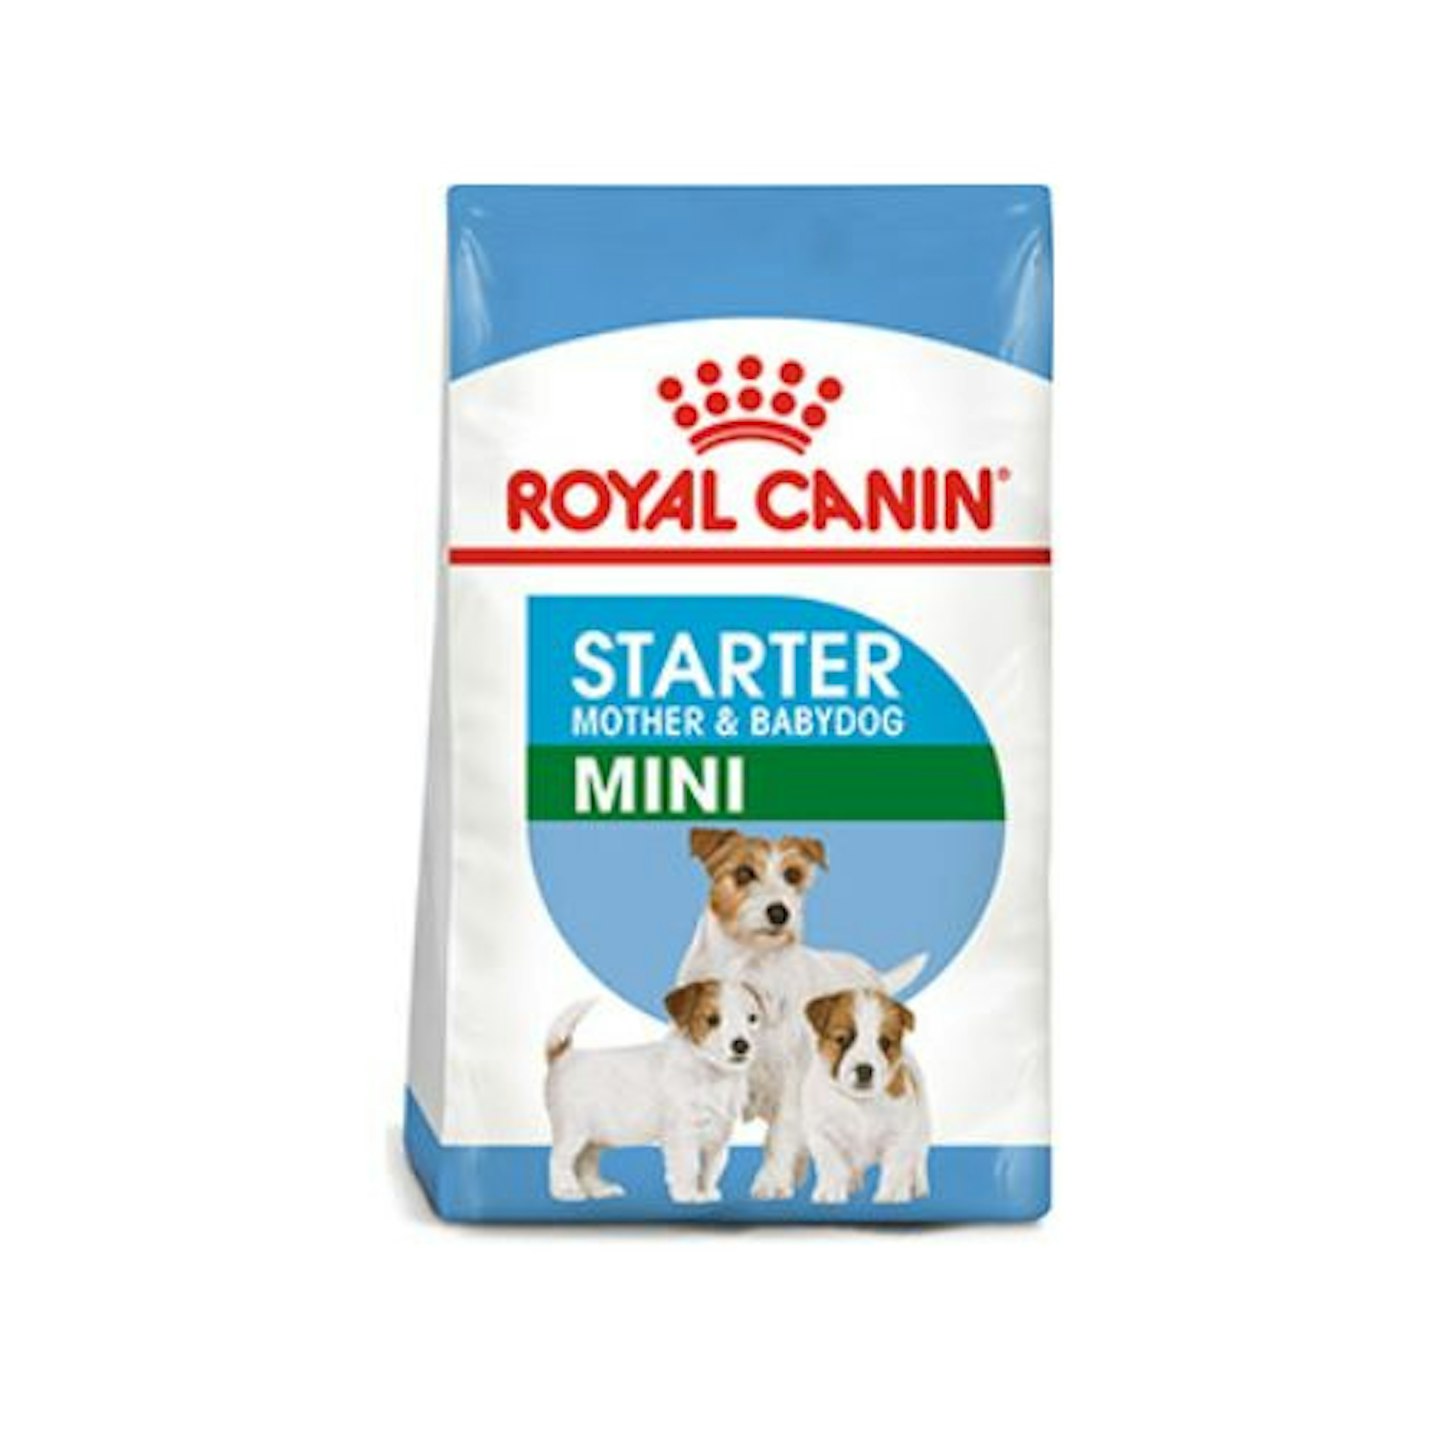 Royal Canin Starter Mother & Babydog Mini Breed Dry Puppy/Adult Dog Food